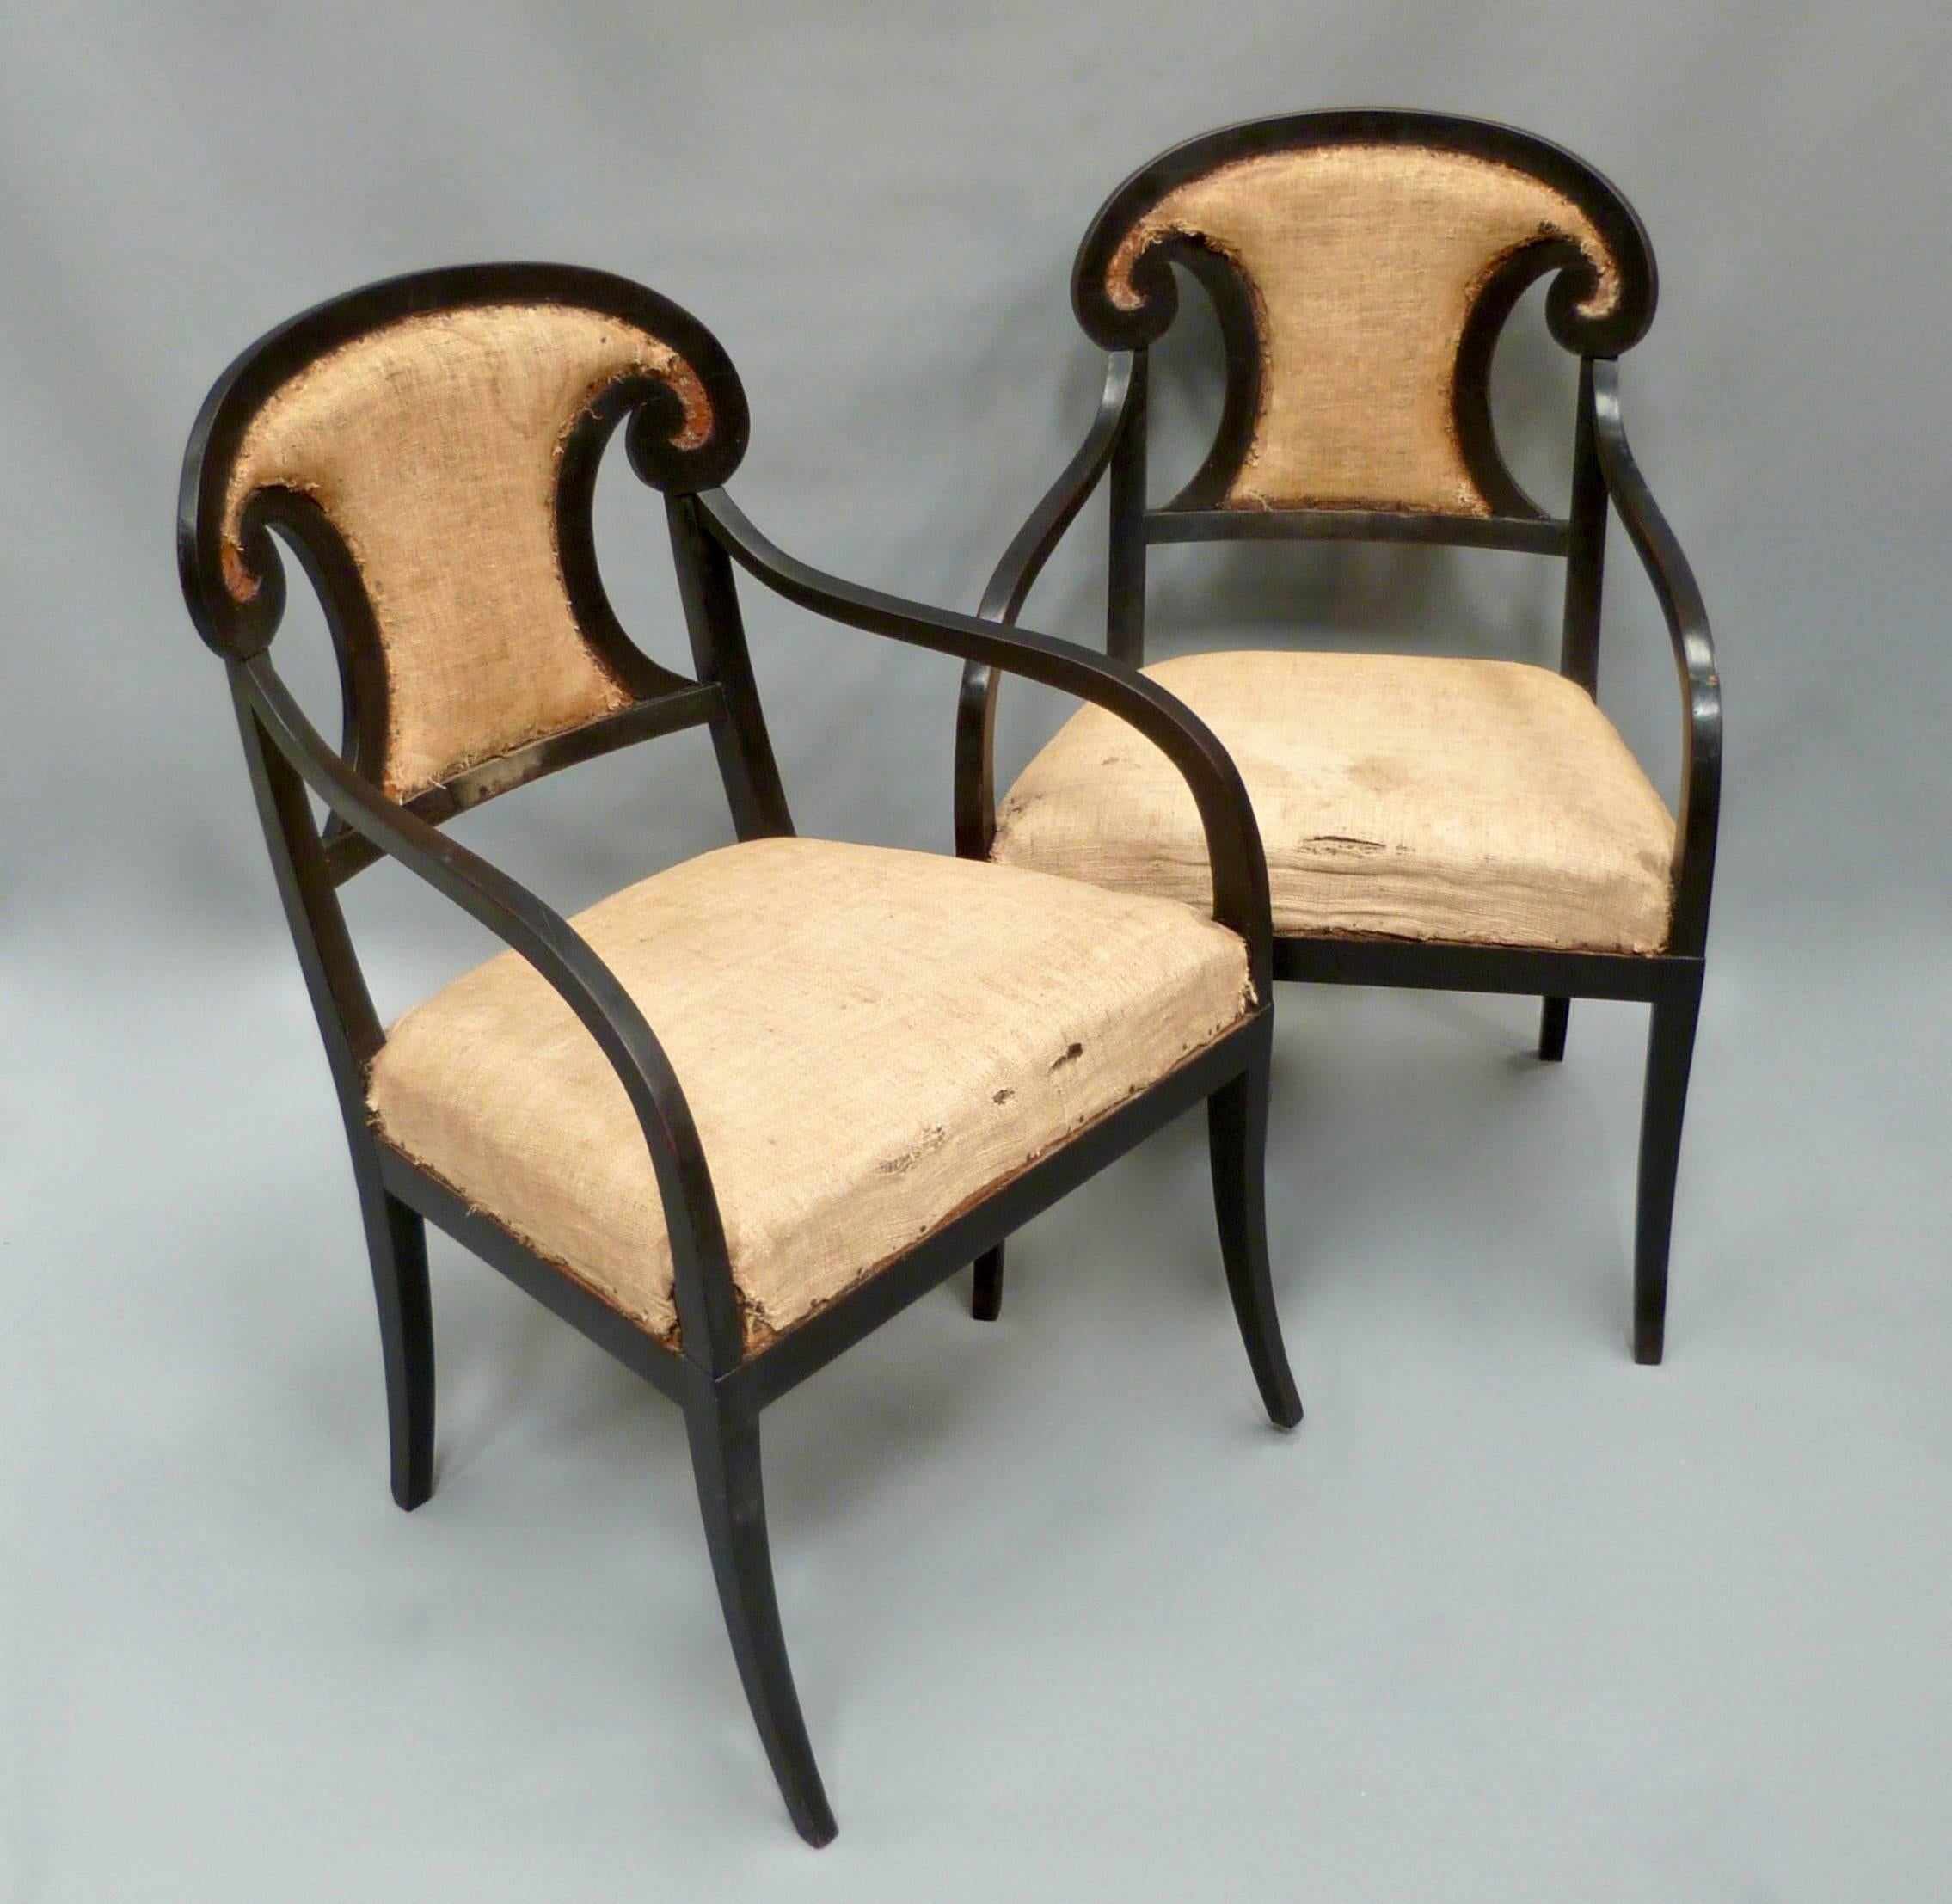 A set of four late 19th century Swedish Biedermeier chairs.